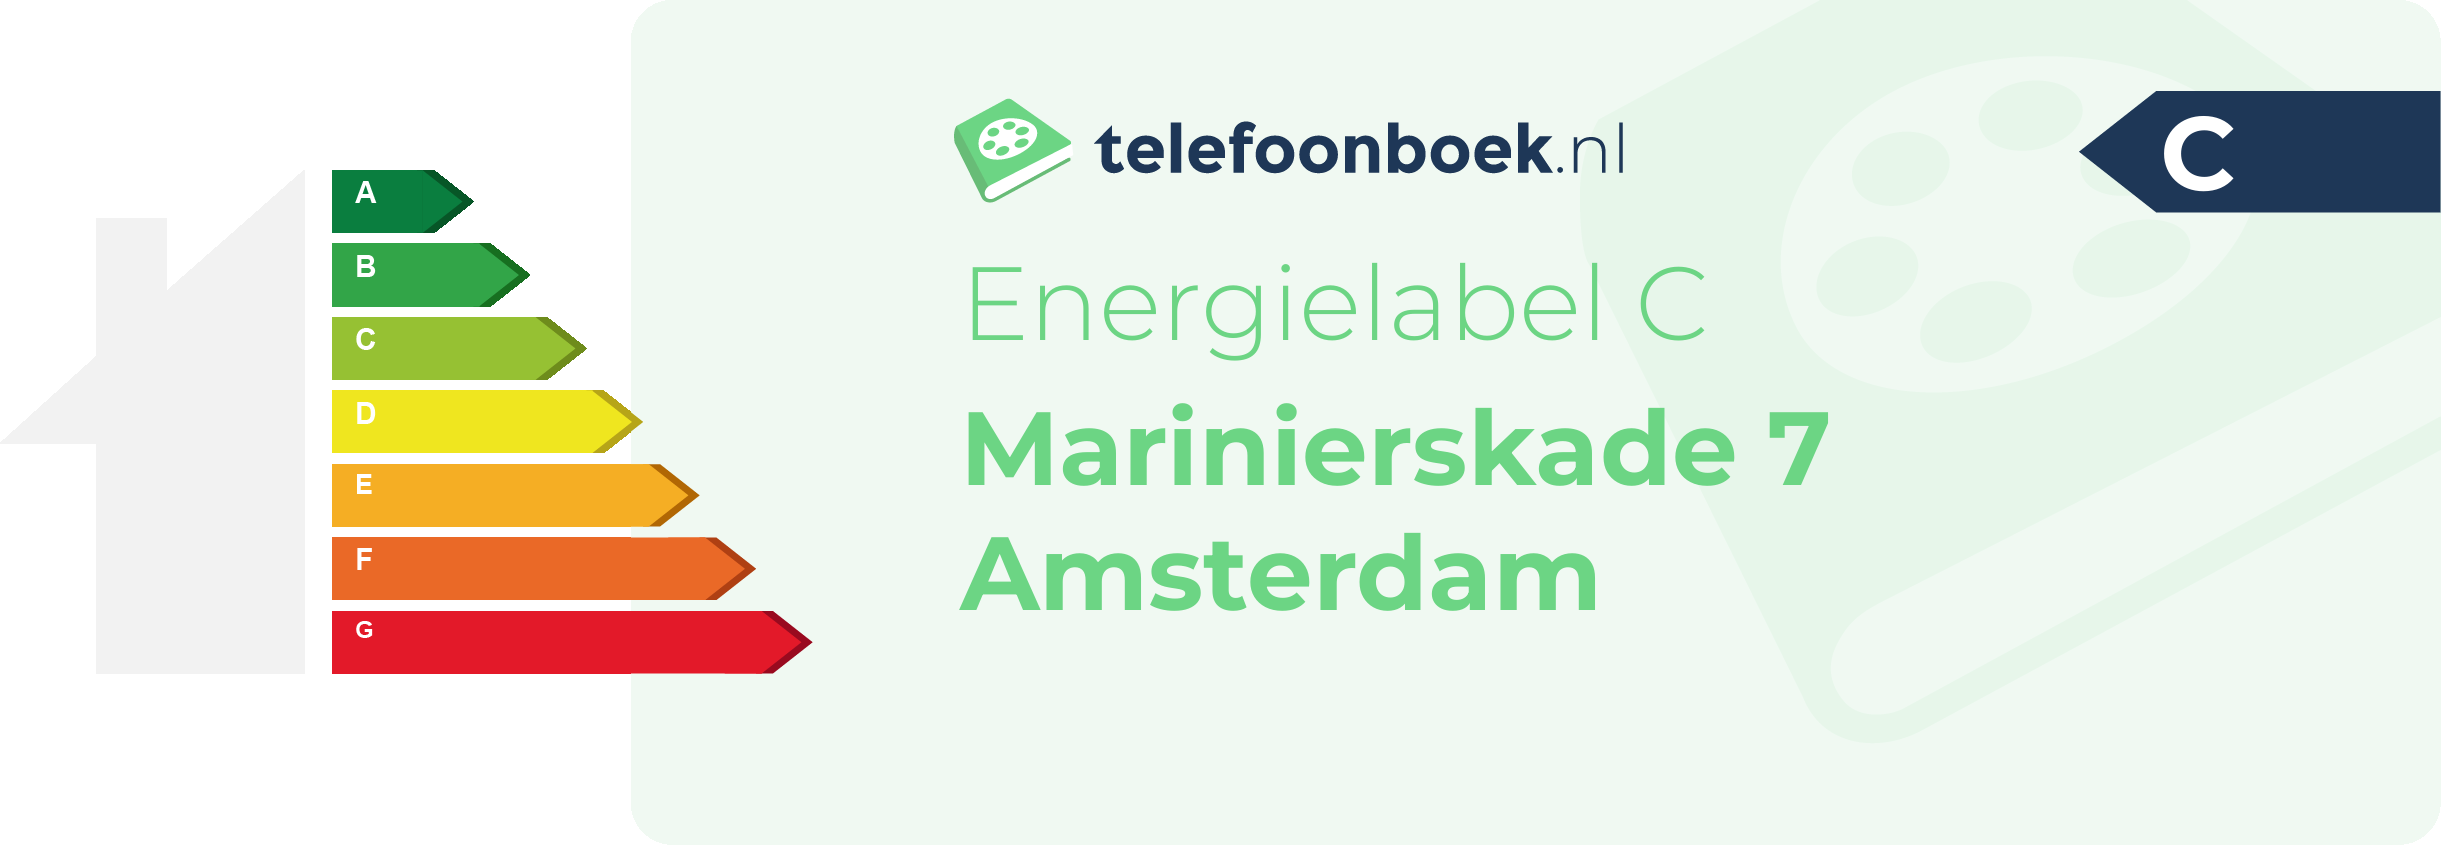 Energielabel Marinierskade 7 Amsterdam